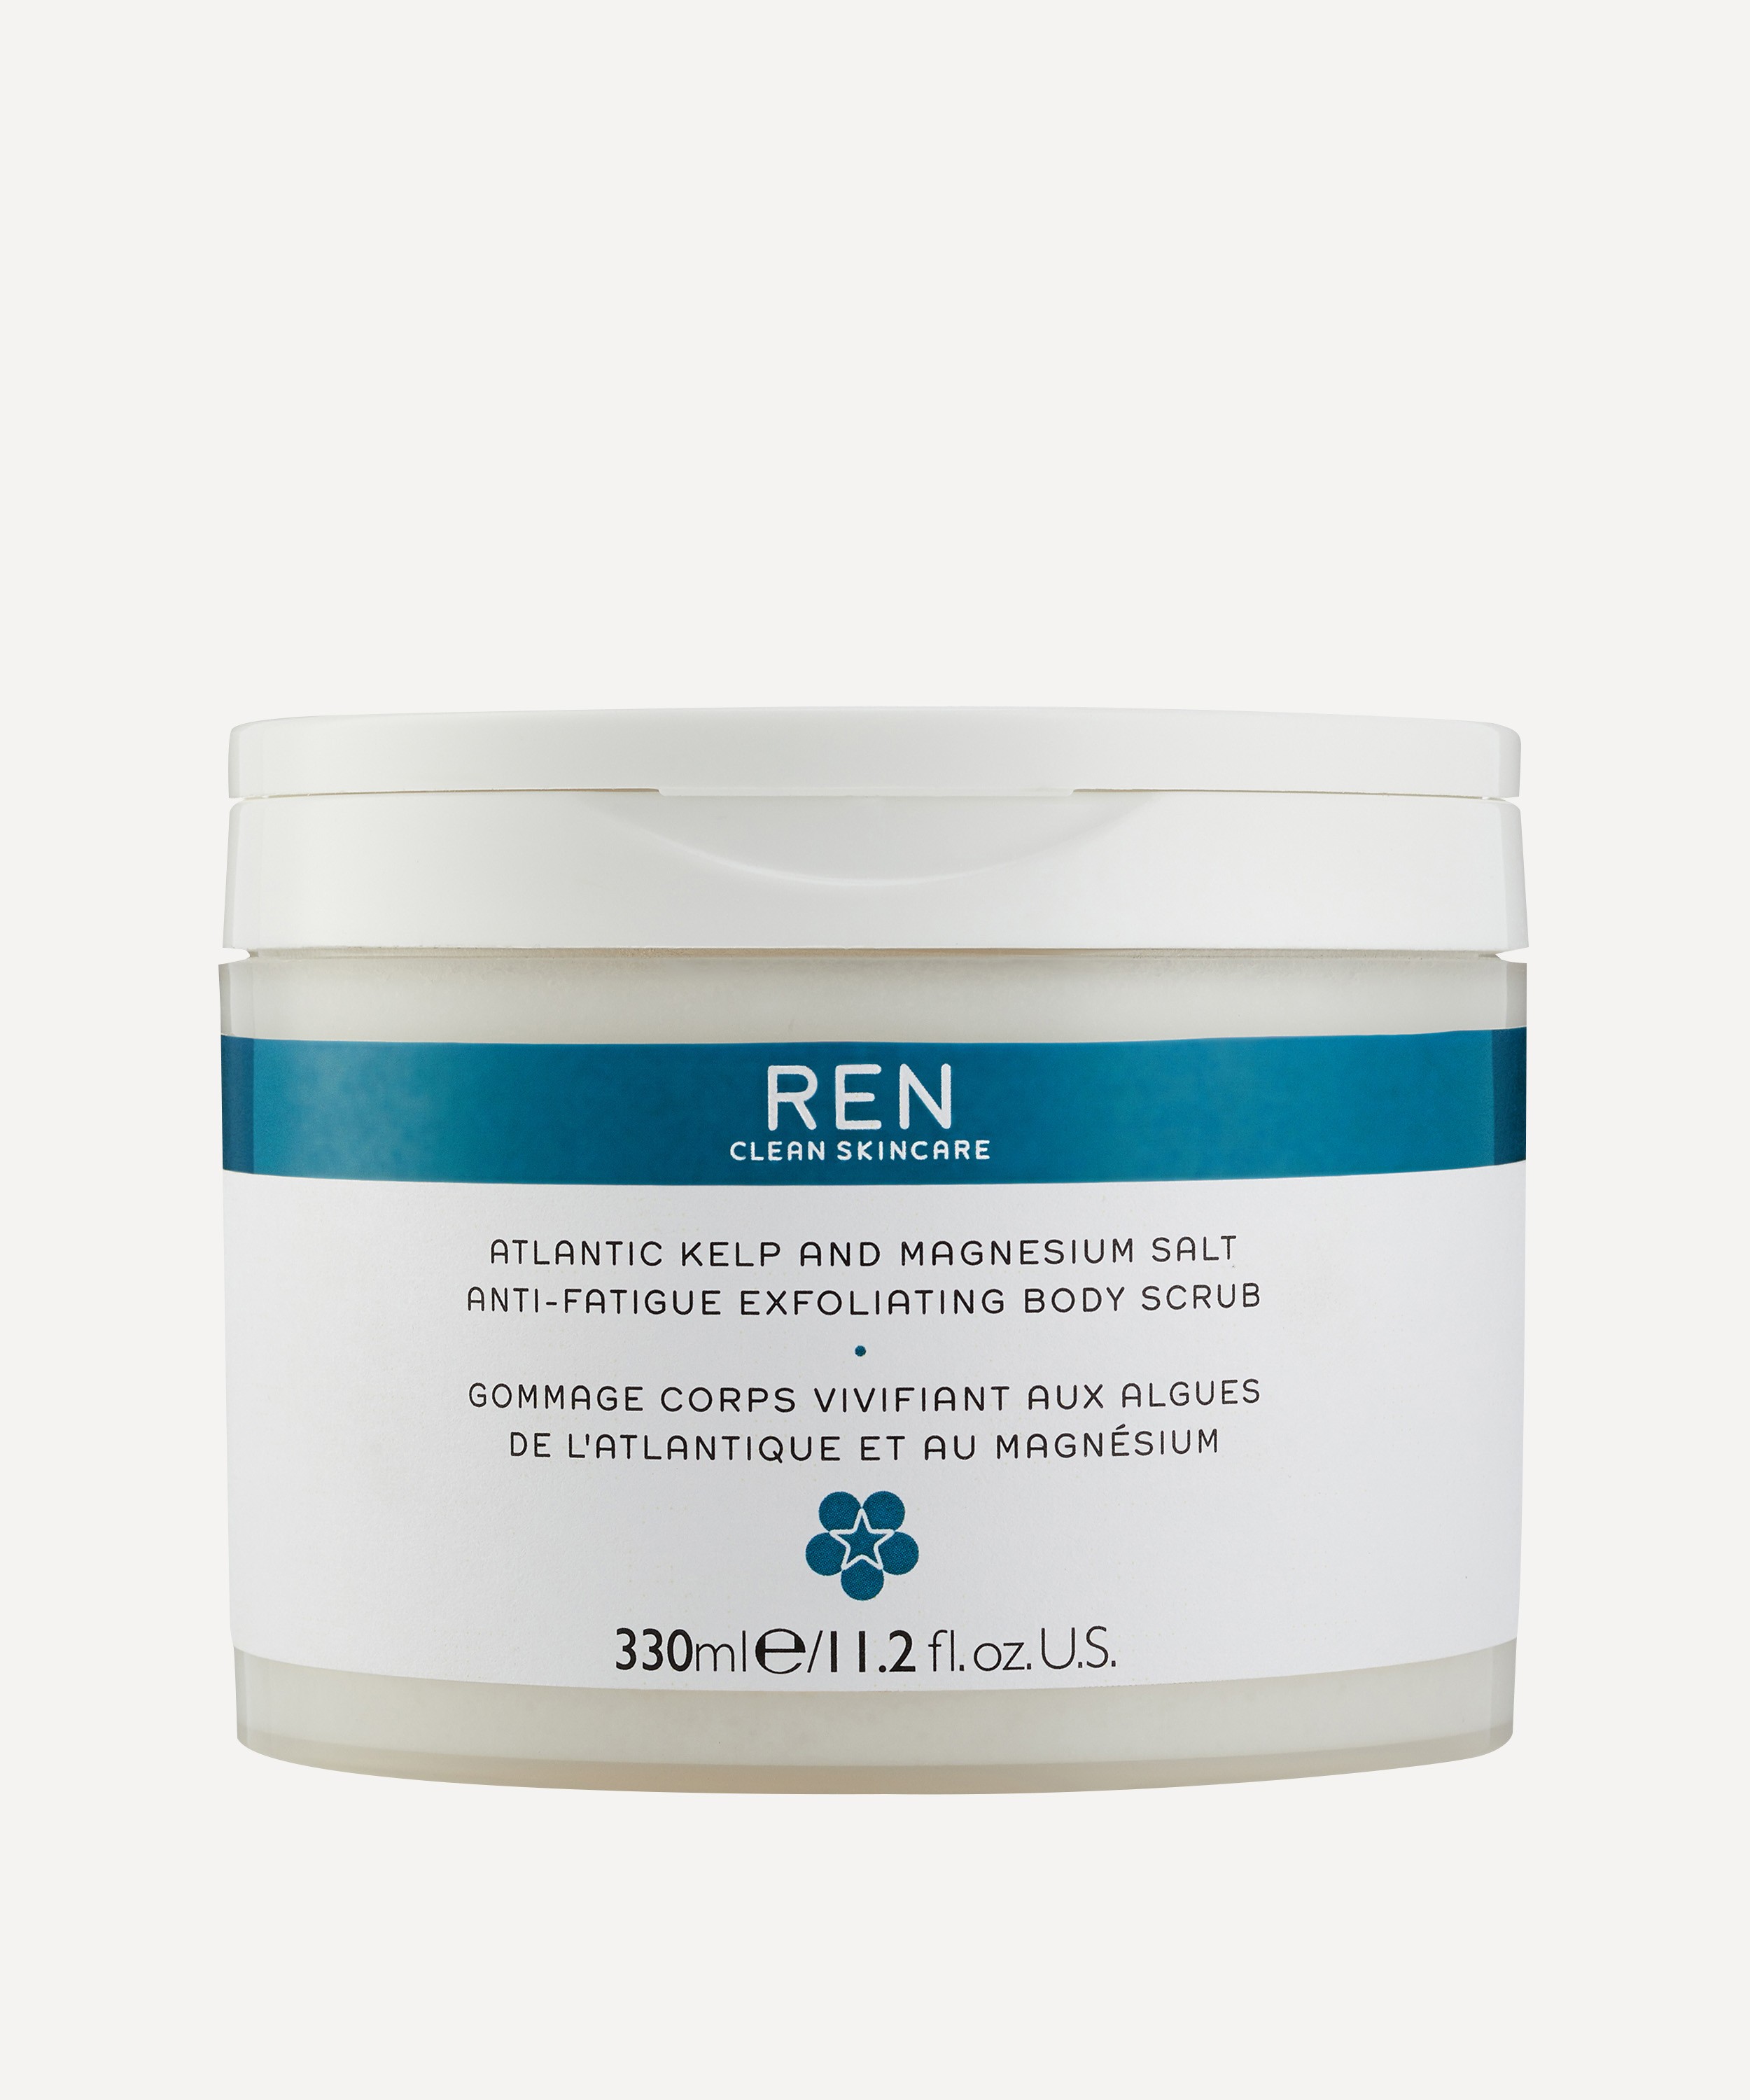 REN Clean Skincare - Atlantic Kelp and Magnesium Salt Anti-Fatigue Exfoliating Body Scrub 330ml image number 0